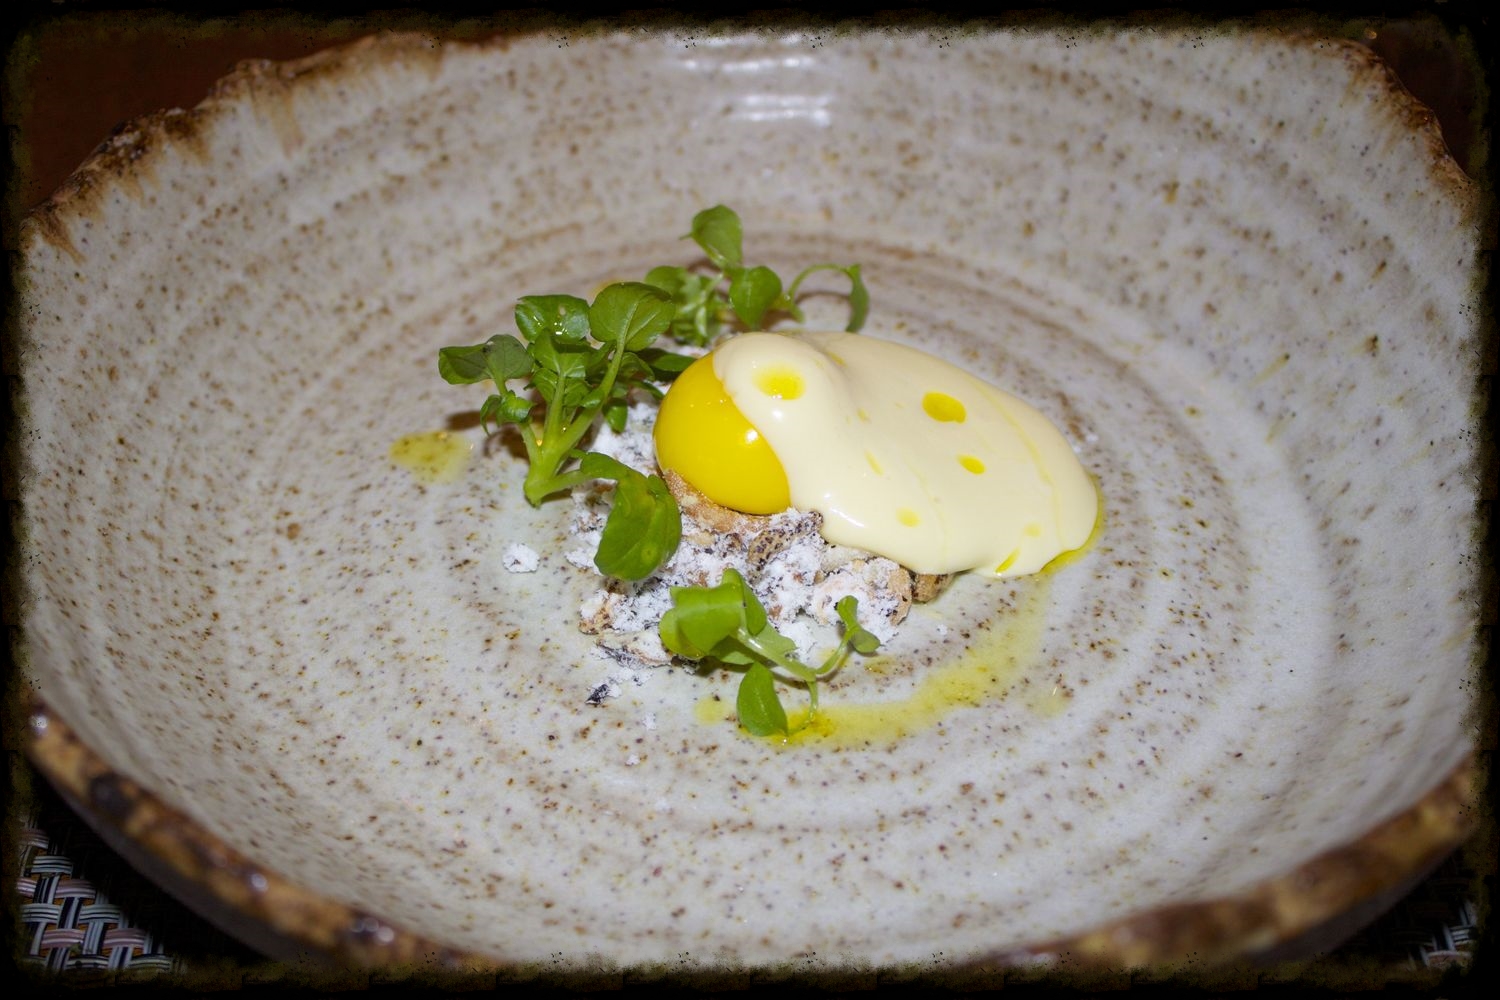  Cod 'yolk' with chickweed, salt and vinegar 